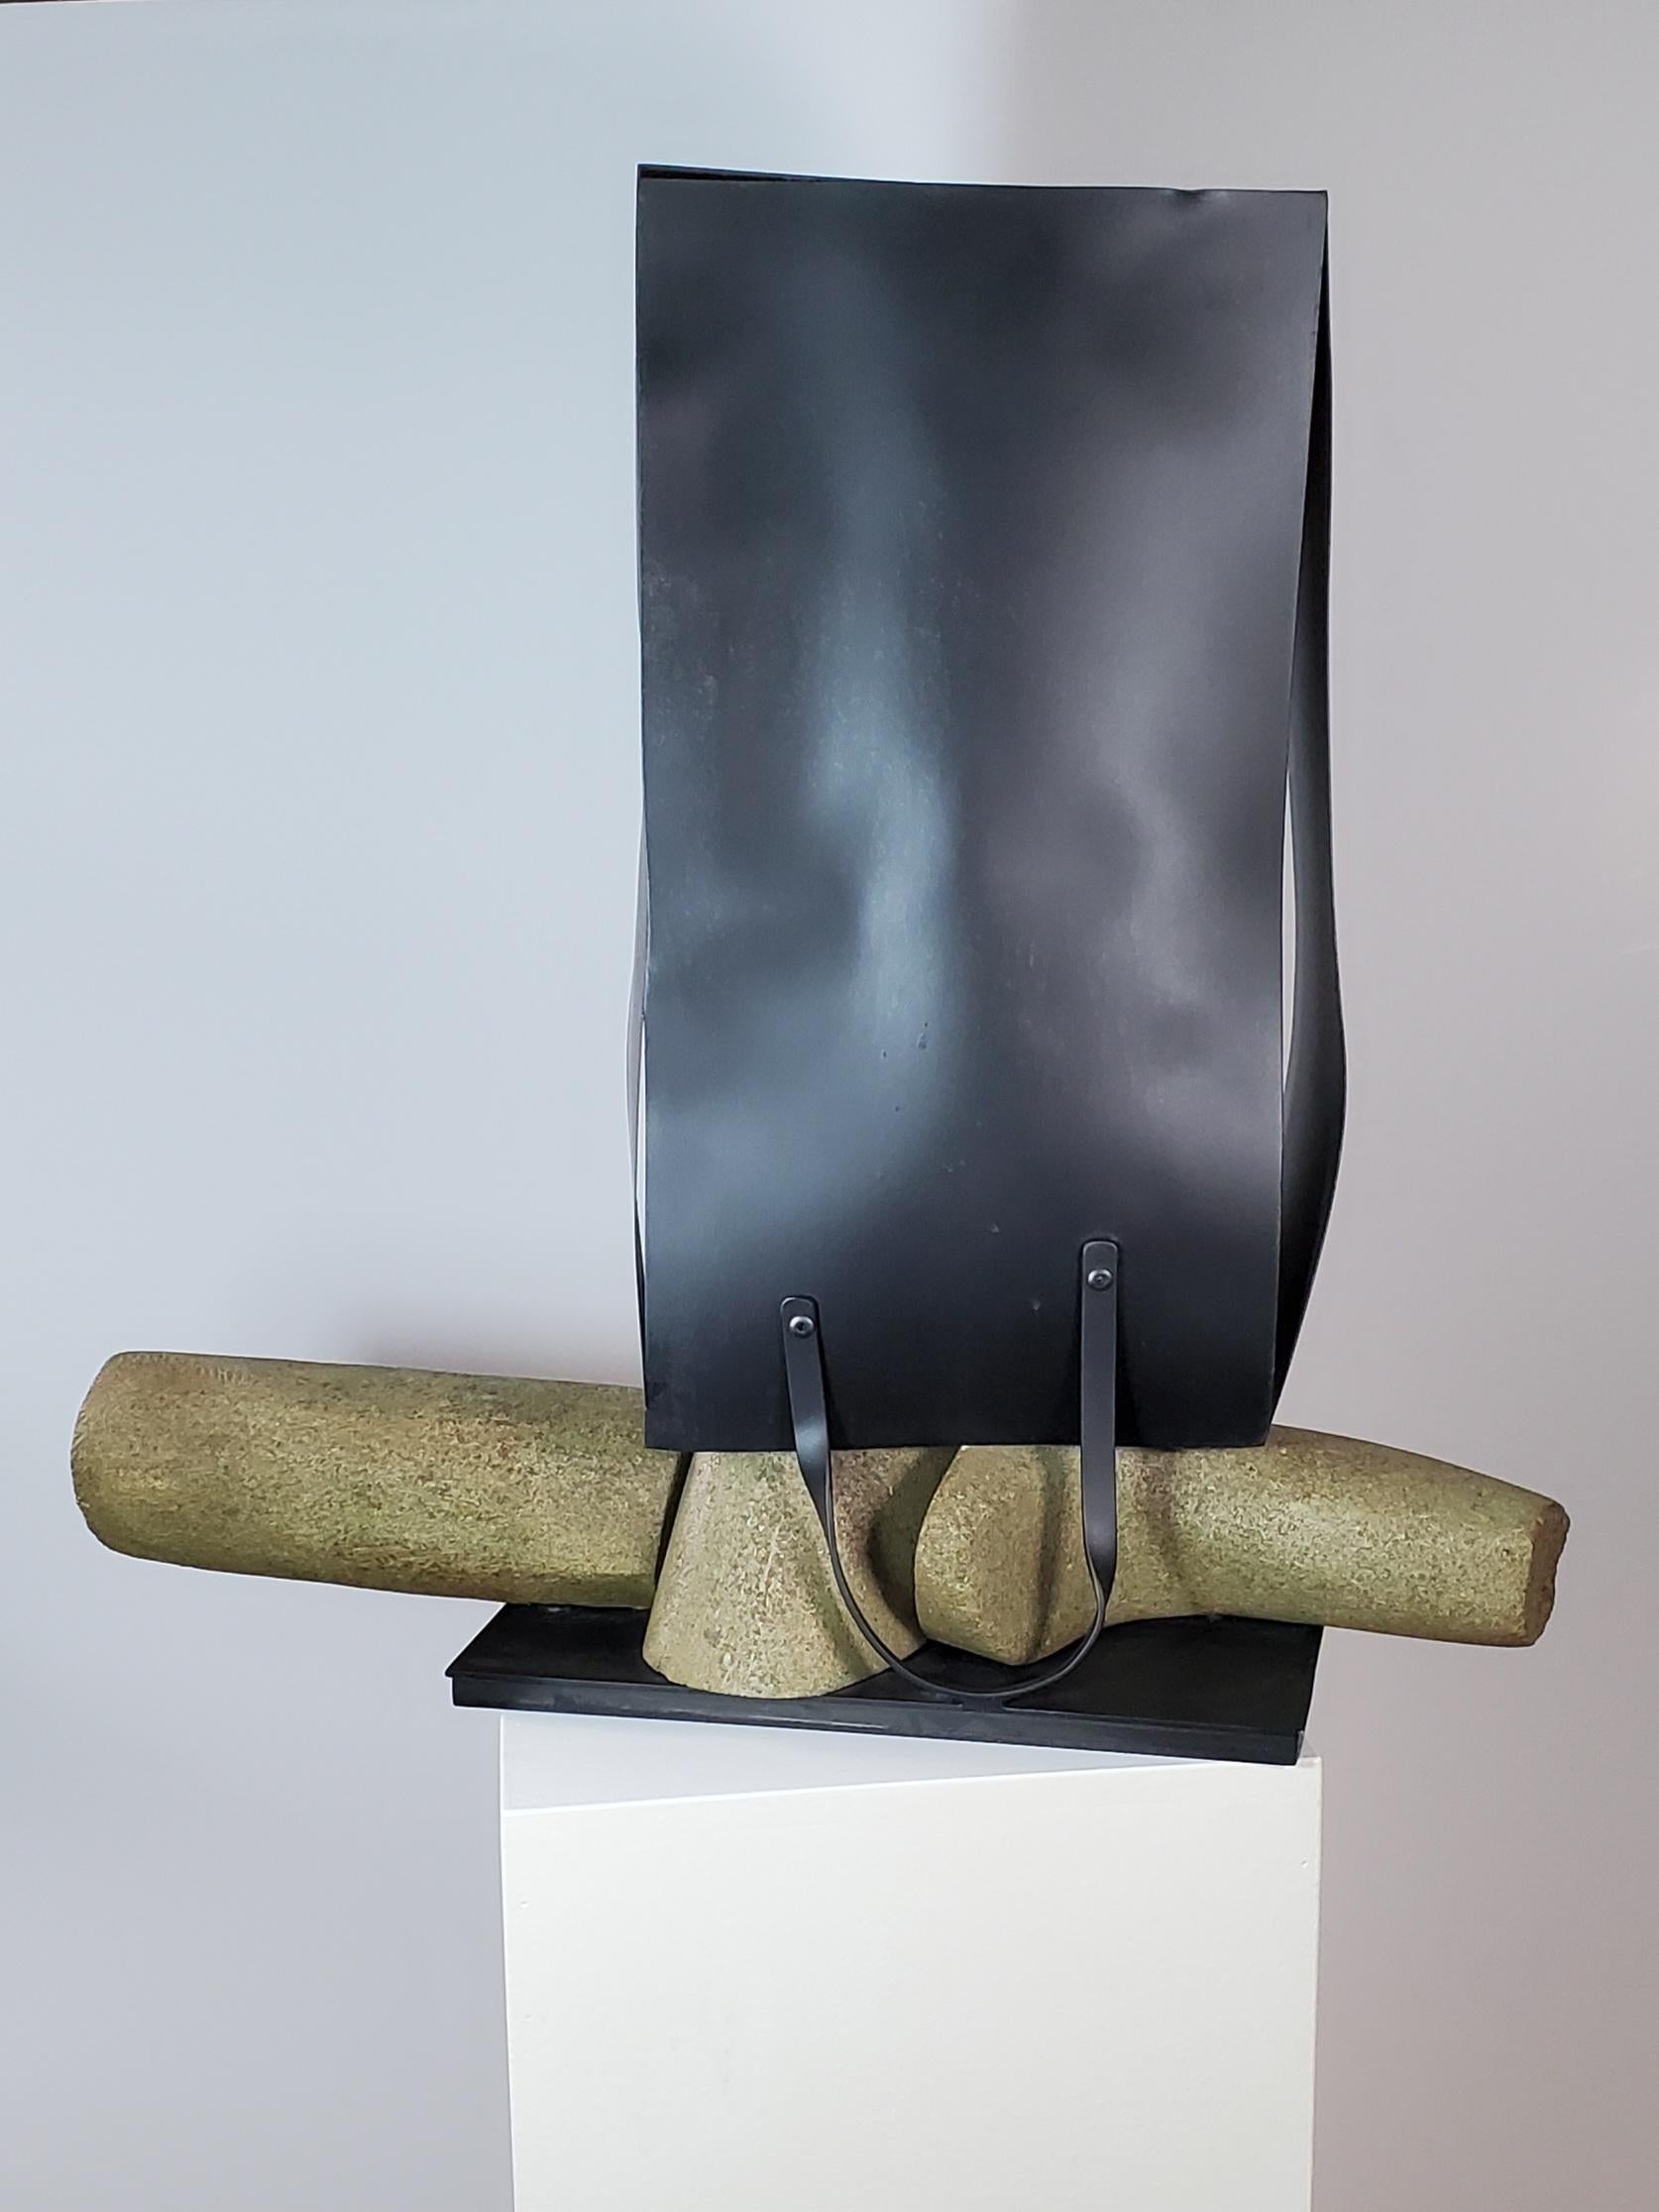 Non-disclosure - Sculpture by Mark Beltchenko Studio